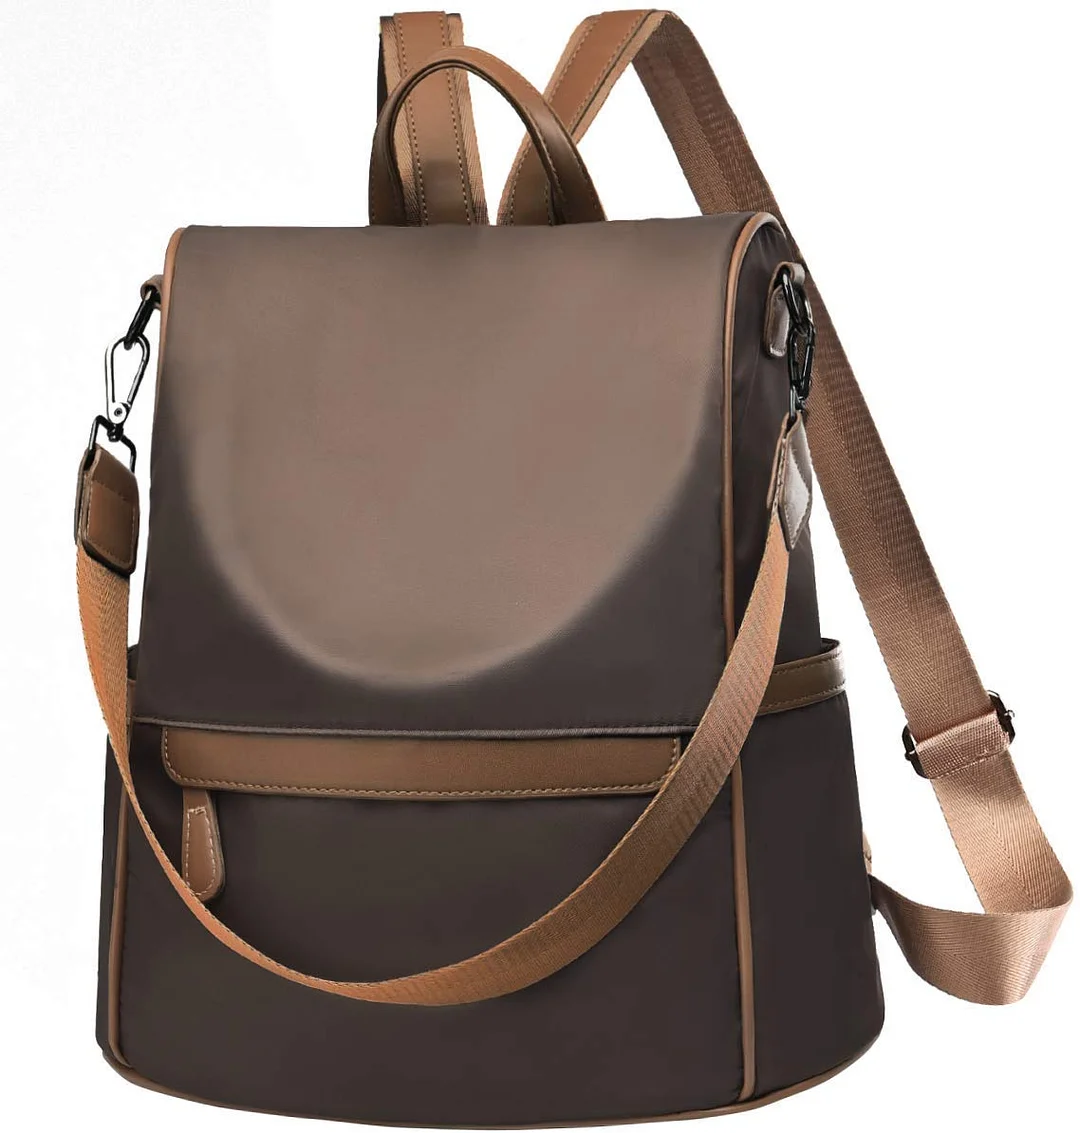 Anti Theft Rucksack Nylon Waterproof Daypack Lightweight Shoulder Bags